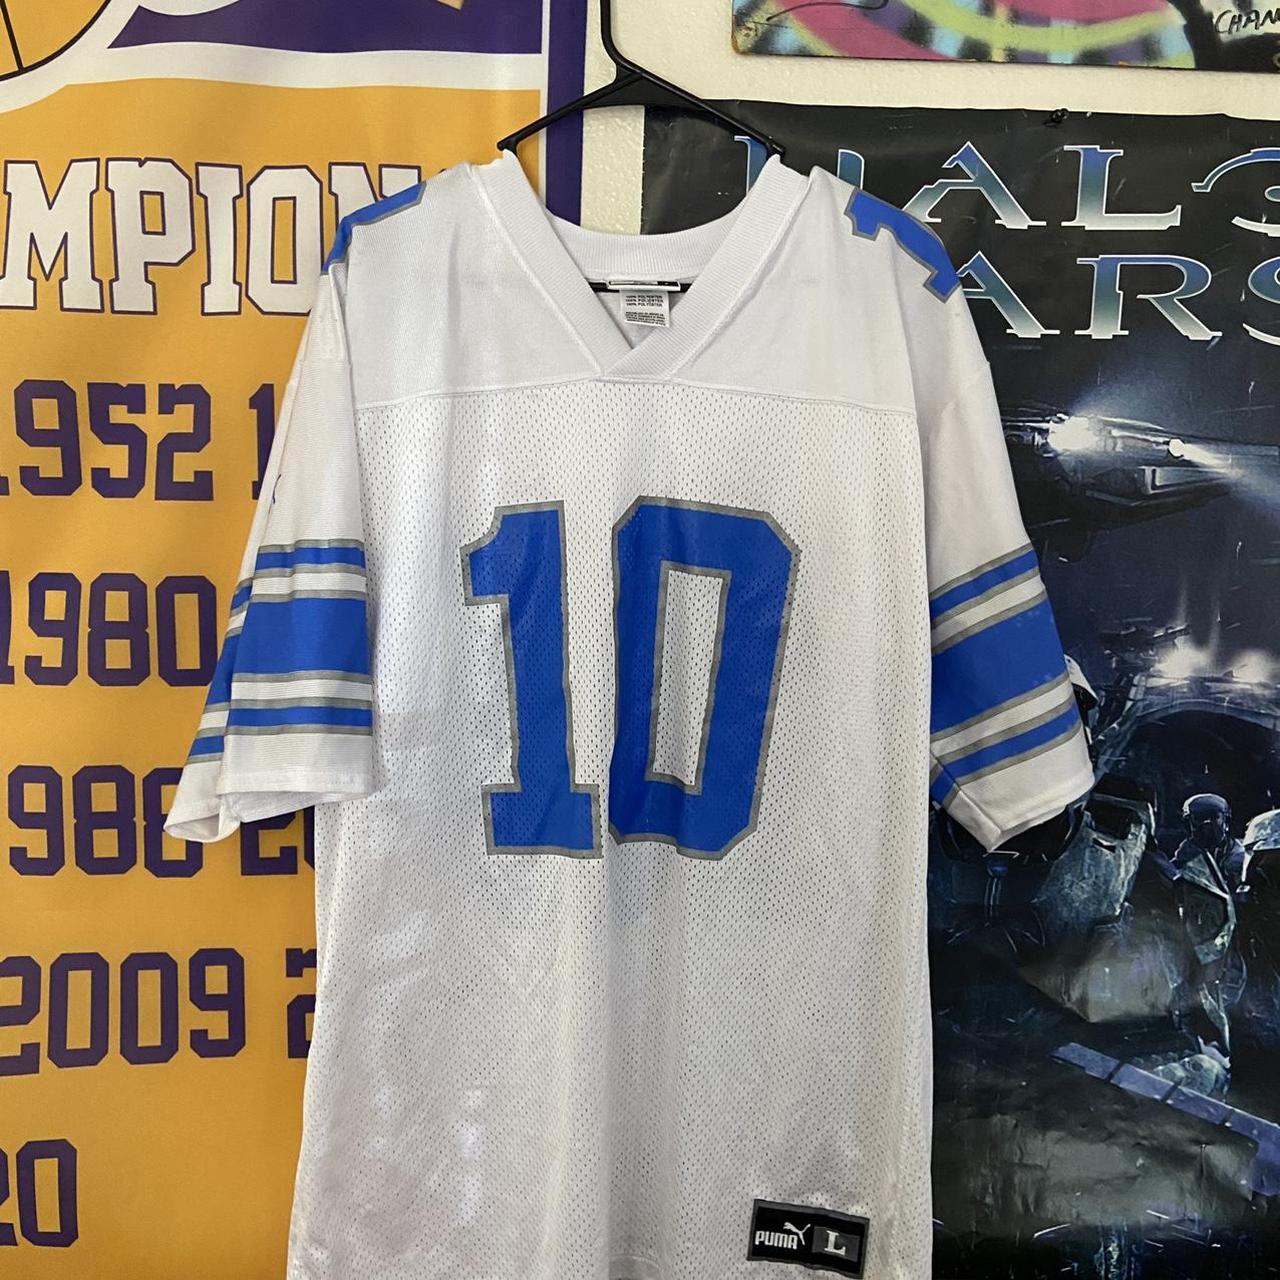 Product Image 1 - NFL Lions jersey
mens size: XL

MESSAGE